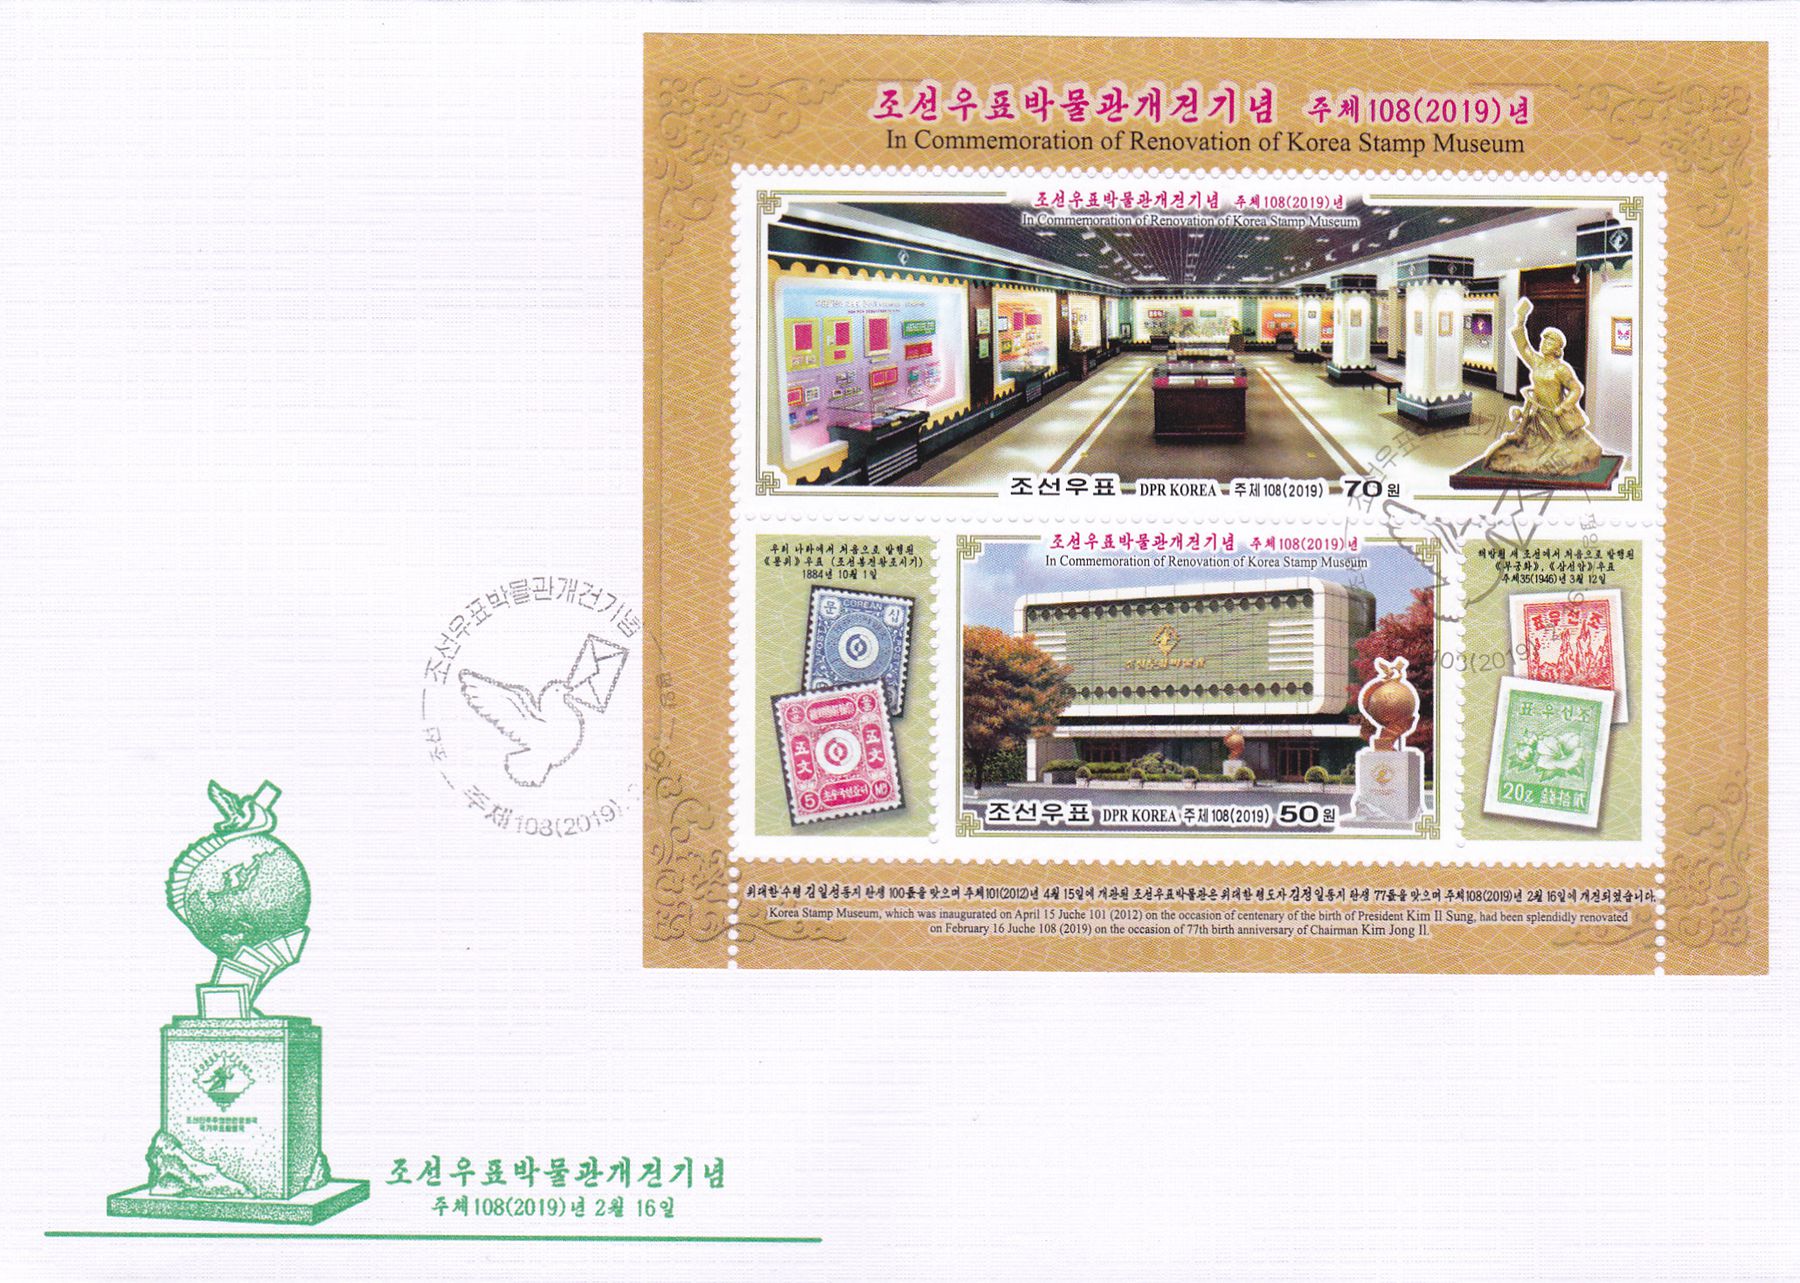 L9782, Korea "Renovation of Korean Stamp Museum", FDC, 2019